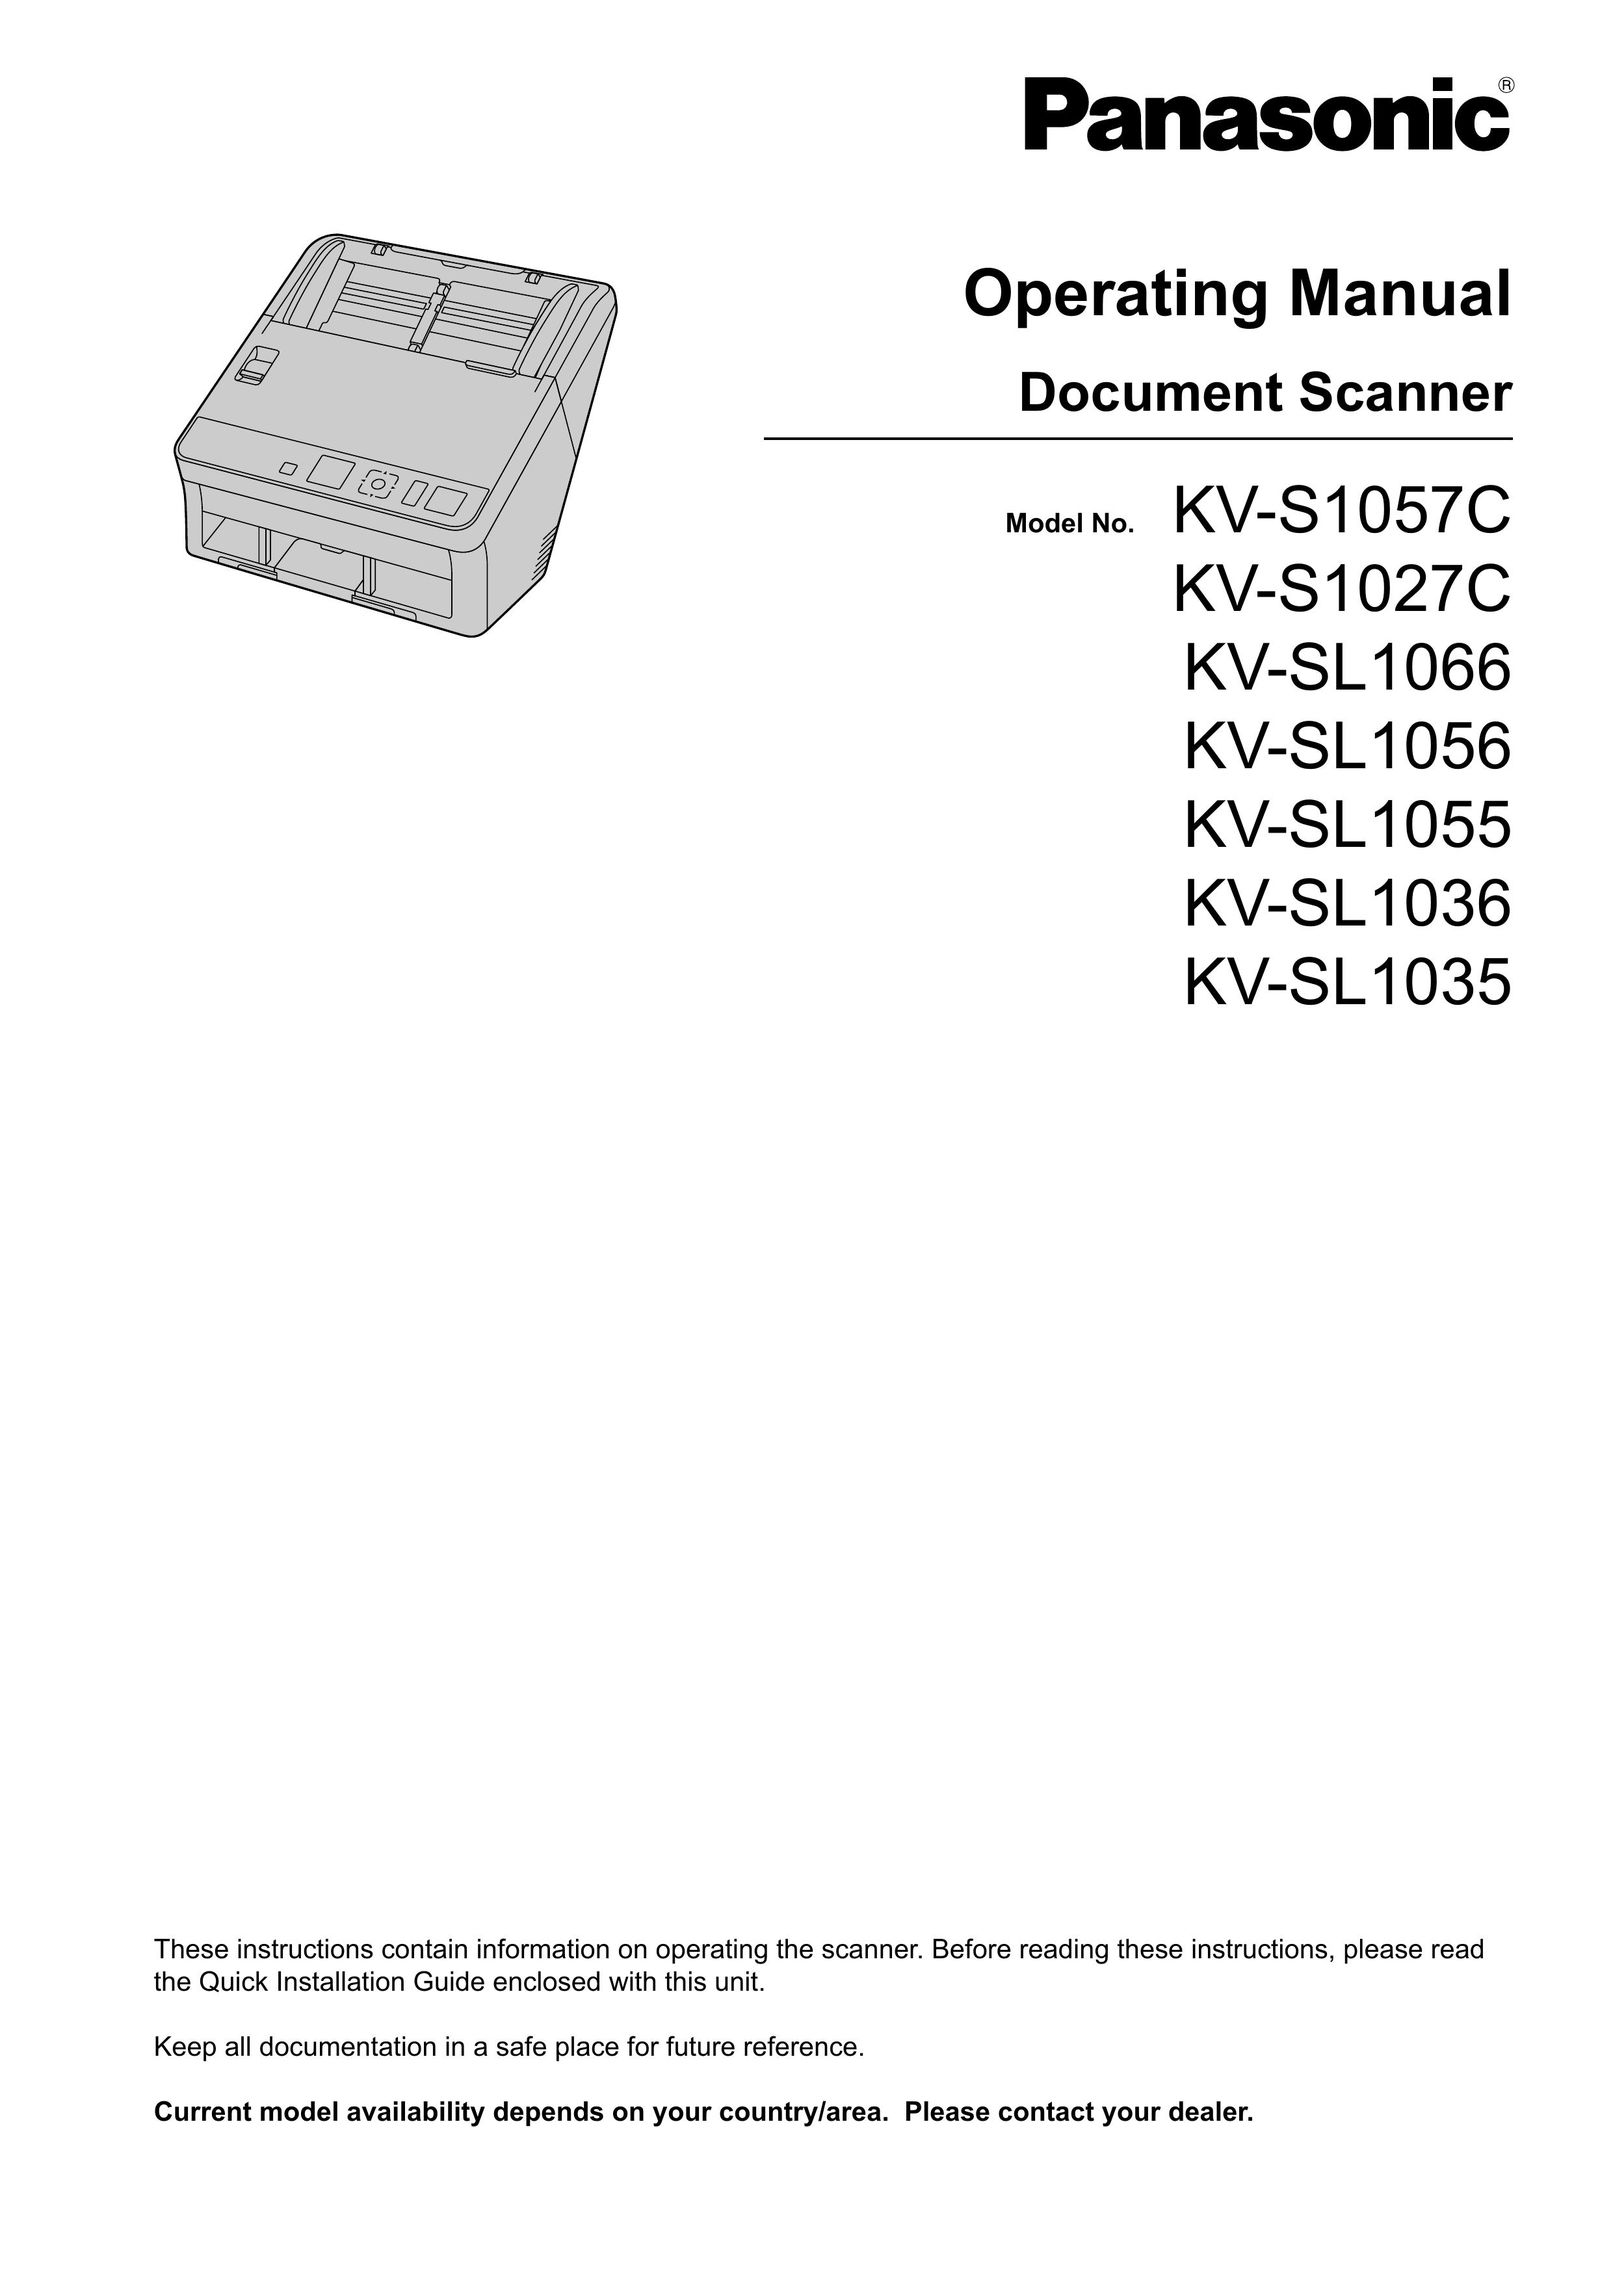 Panasonic KV-S1057C Scanner User Manual